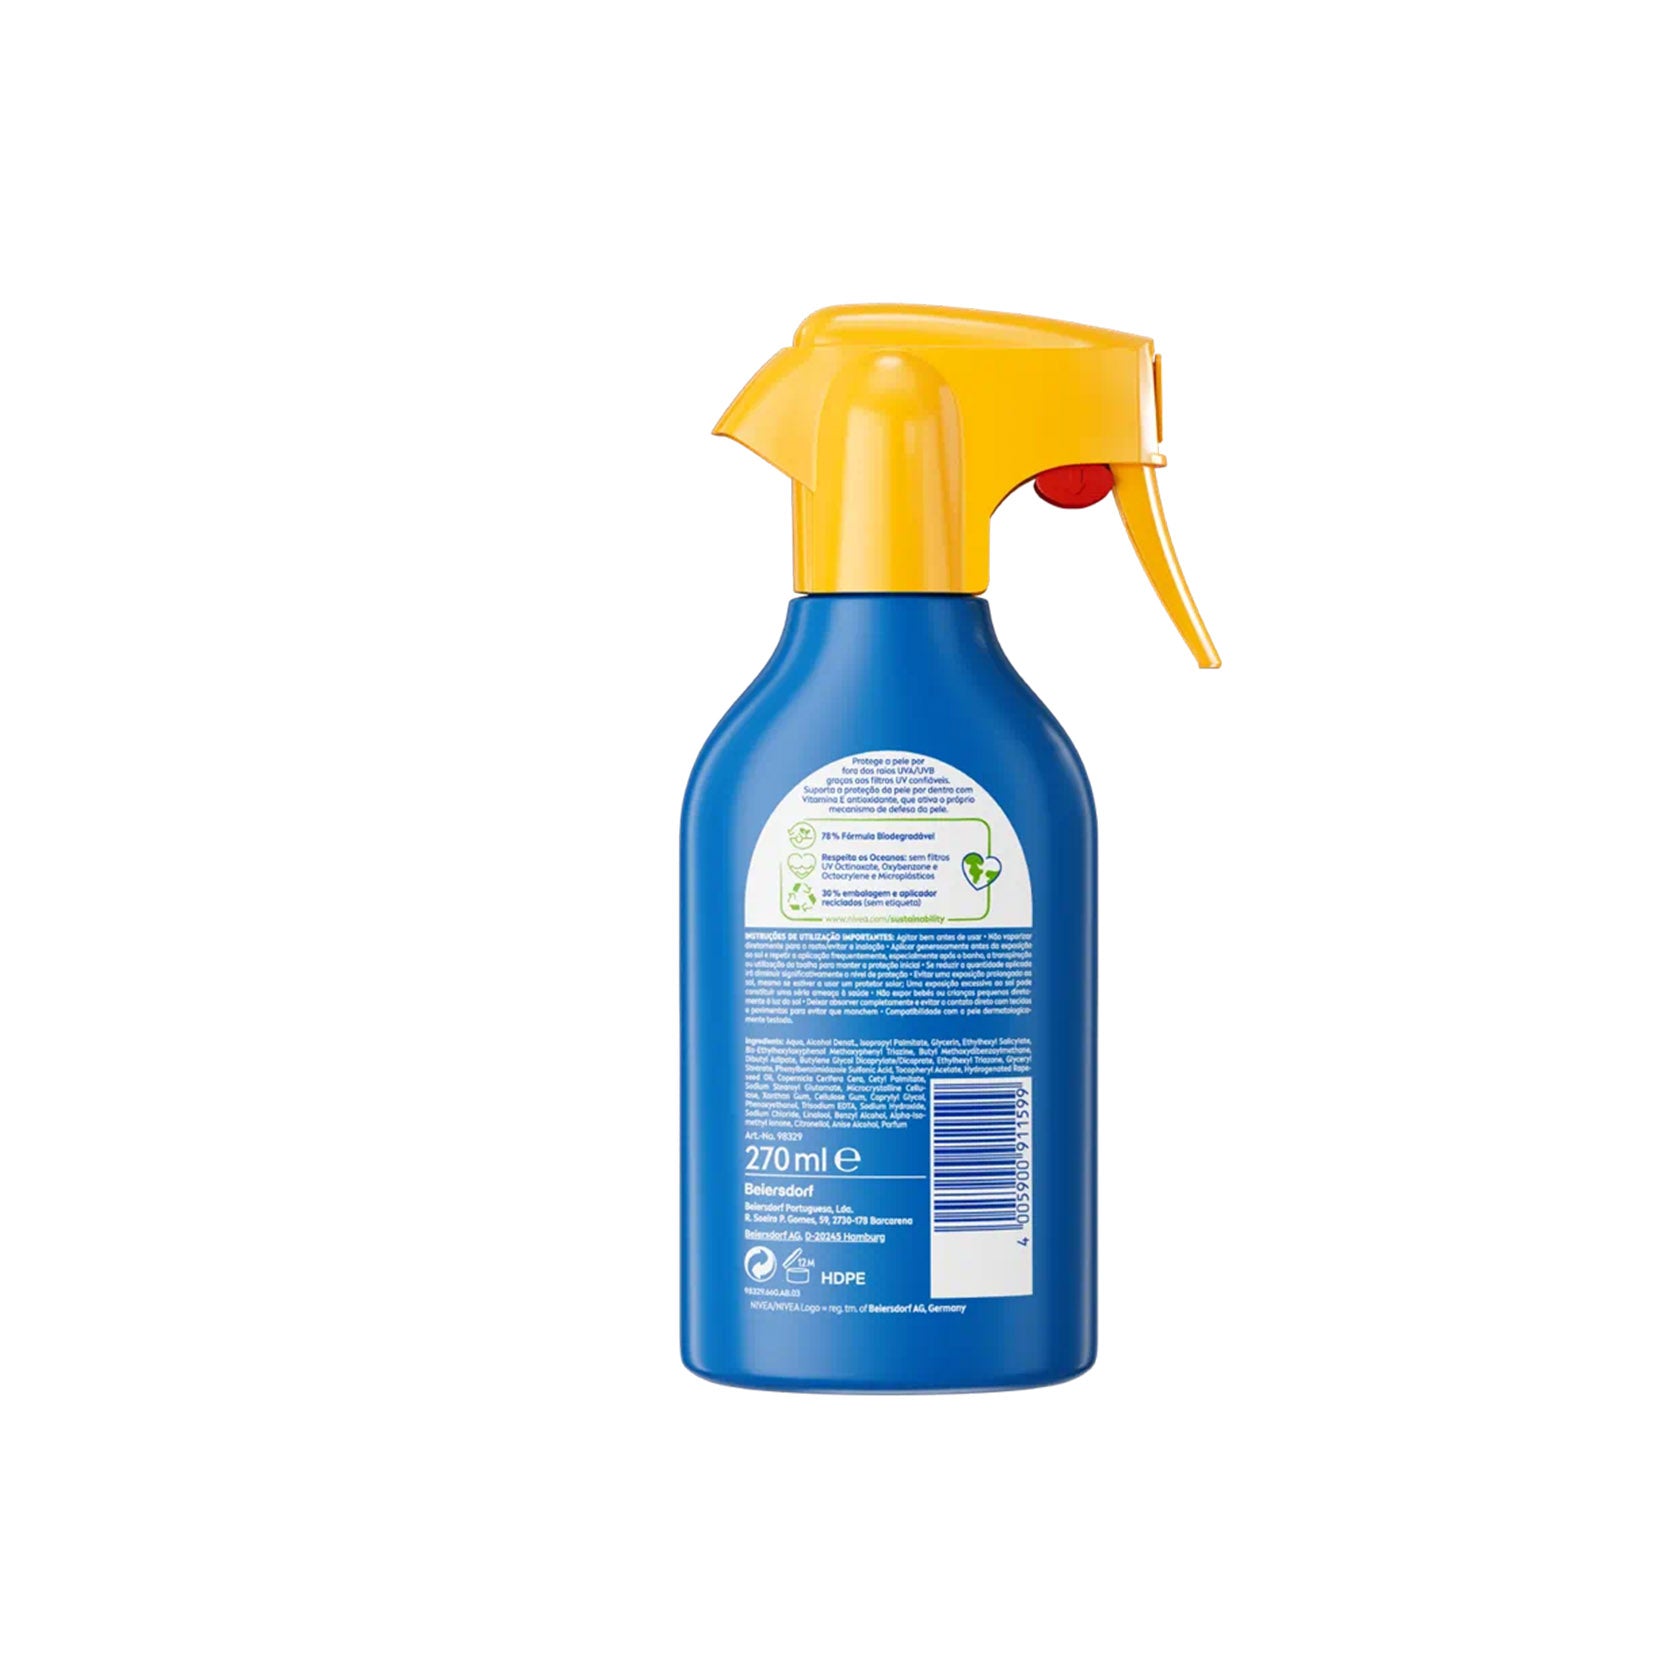 Nivea Sun Spray Protect & Moisture FP30 270 ml